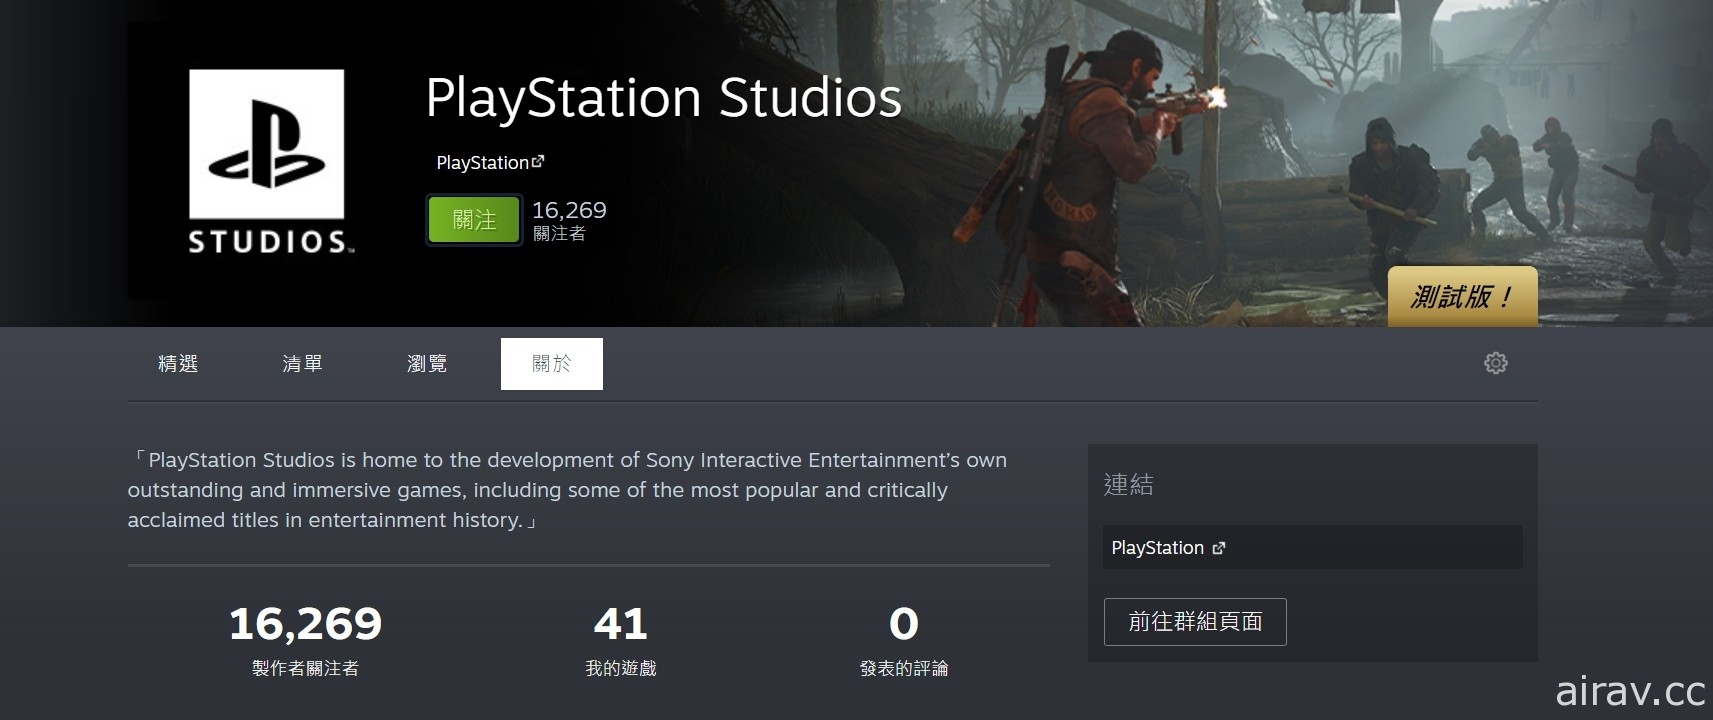 PlayStation Studios 開設 Steam 品牌商店頁面 持續耕耘 PC 遊戲市場